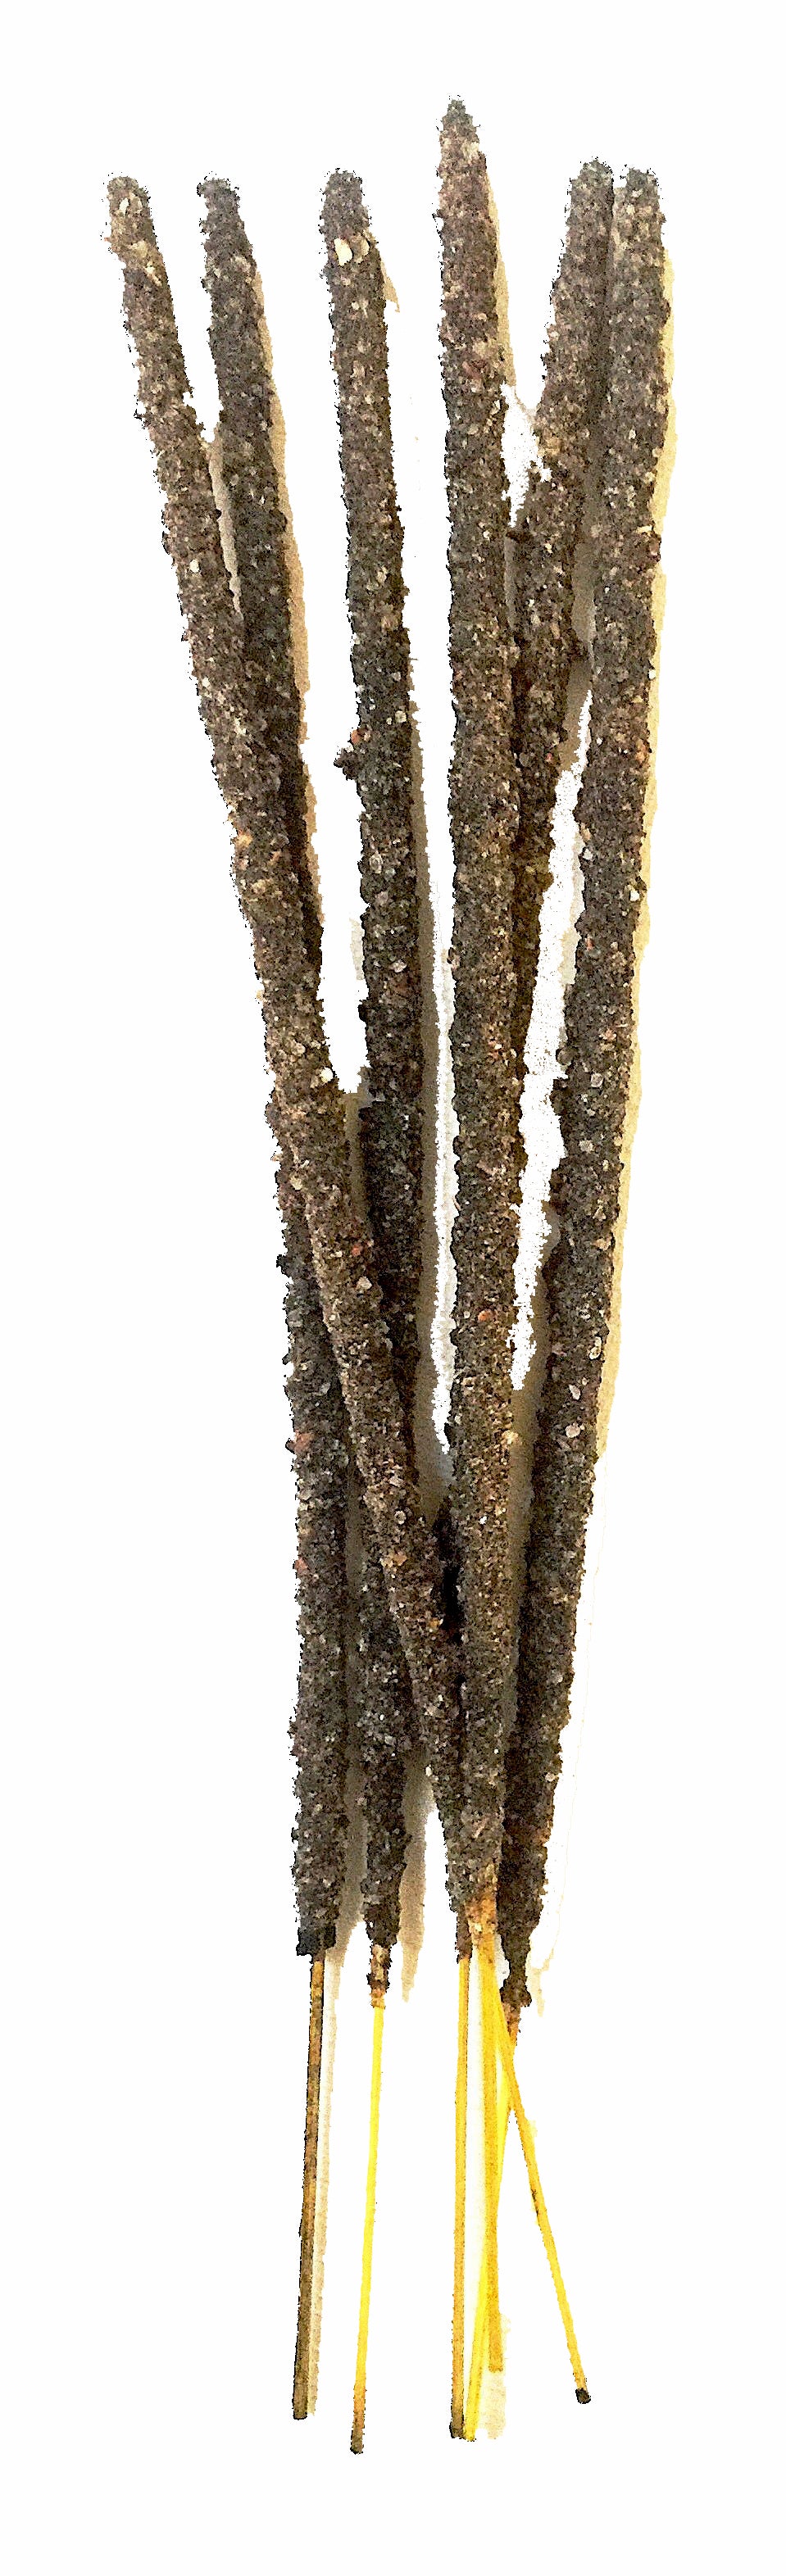 PK/6 - Artisan Incense Sticks - Frankincense & Myrrh Resin - Sacred Smoke